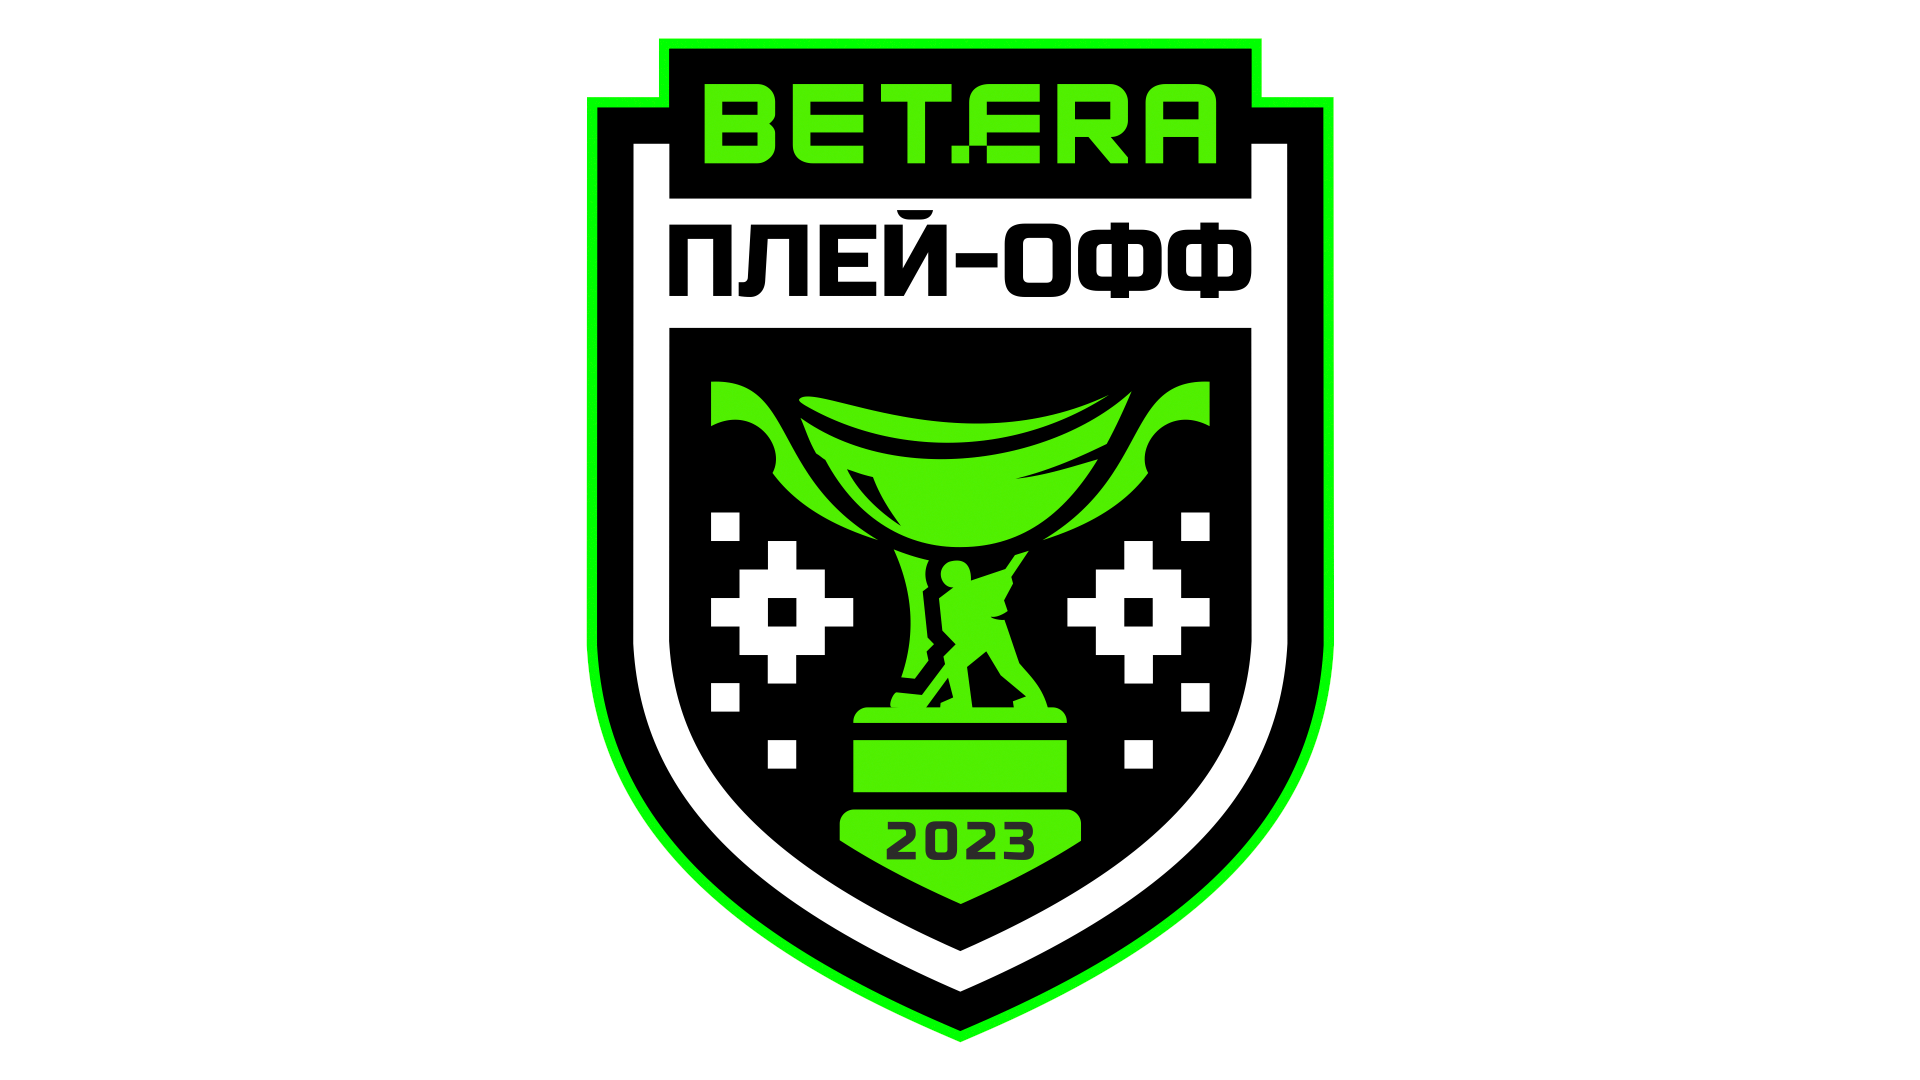 Хоккей беларусь плей офф 2023 экстралига. Экстралига Беларусь. КХЛ плей-офф 2023 логотип. Плей-офф Адмирал логотип. Торпедо армейцы хоккей логотип.